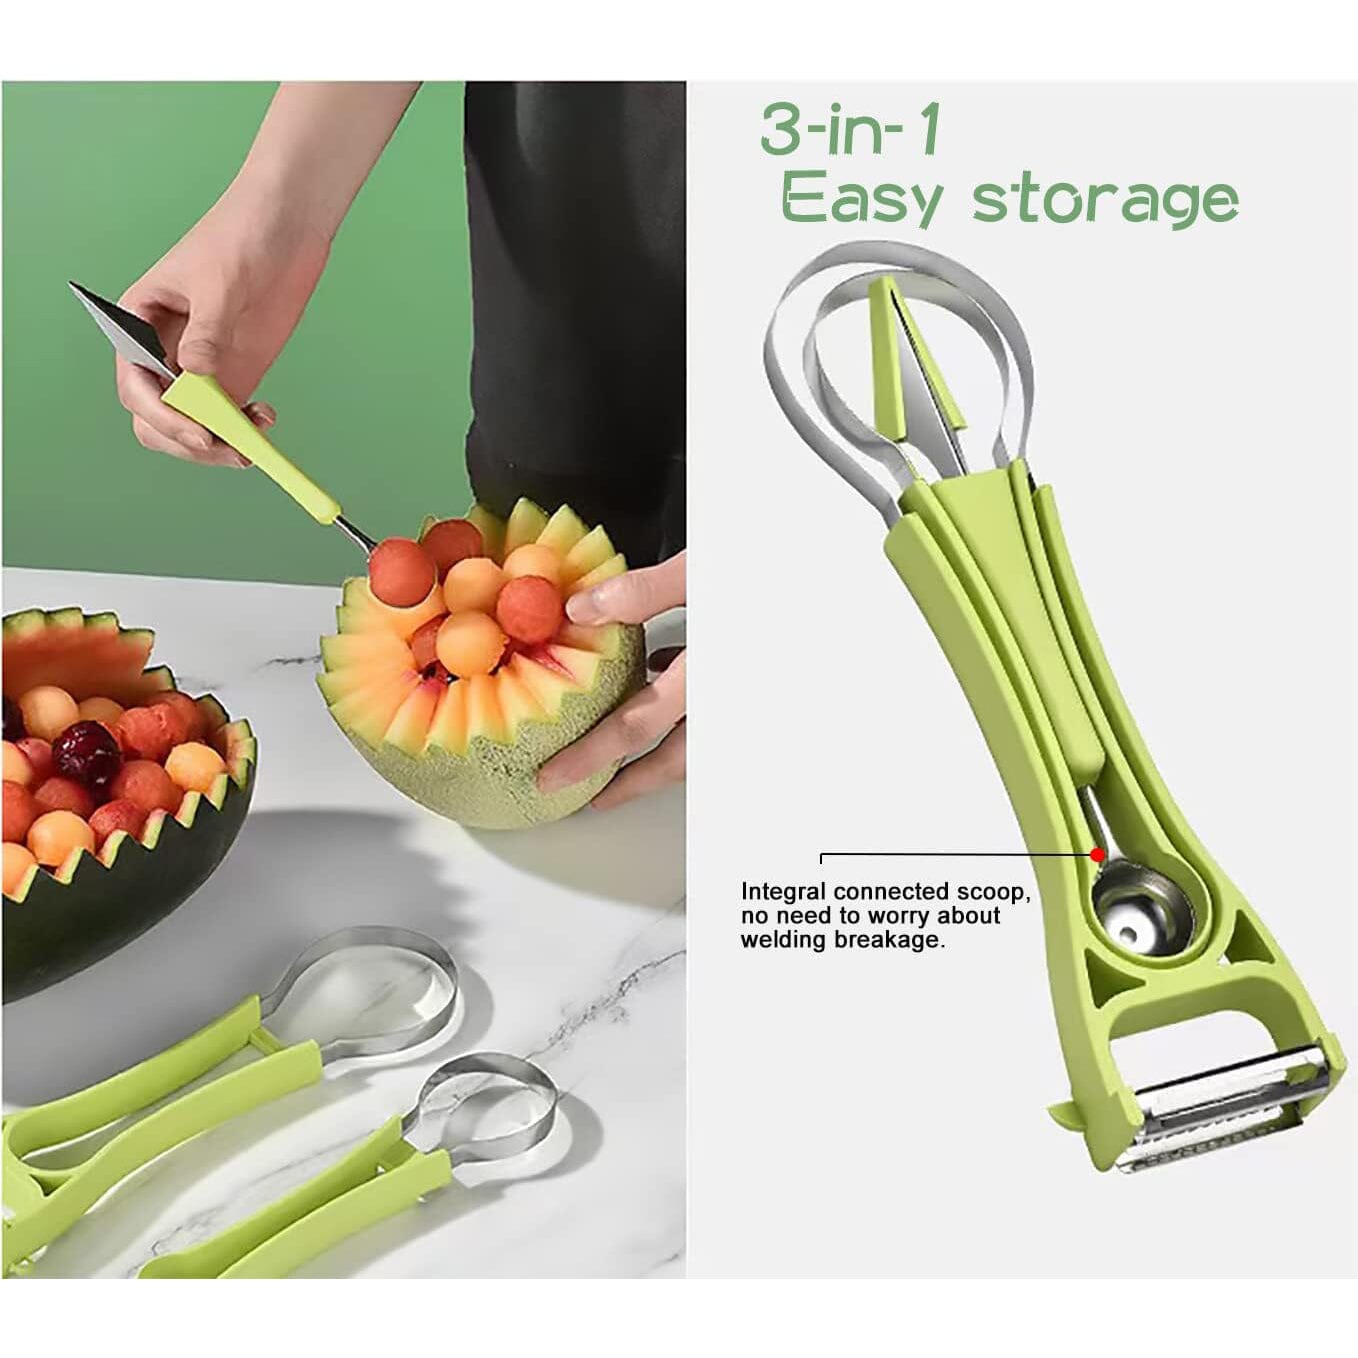 Kitchen Fruit Cutting Tools Set Fruit Peeler Stainless Steel